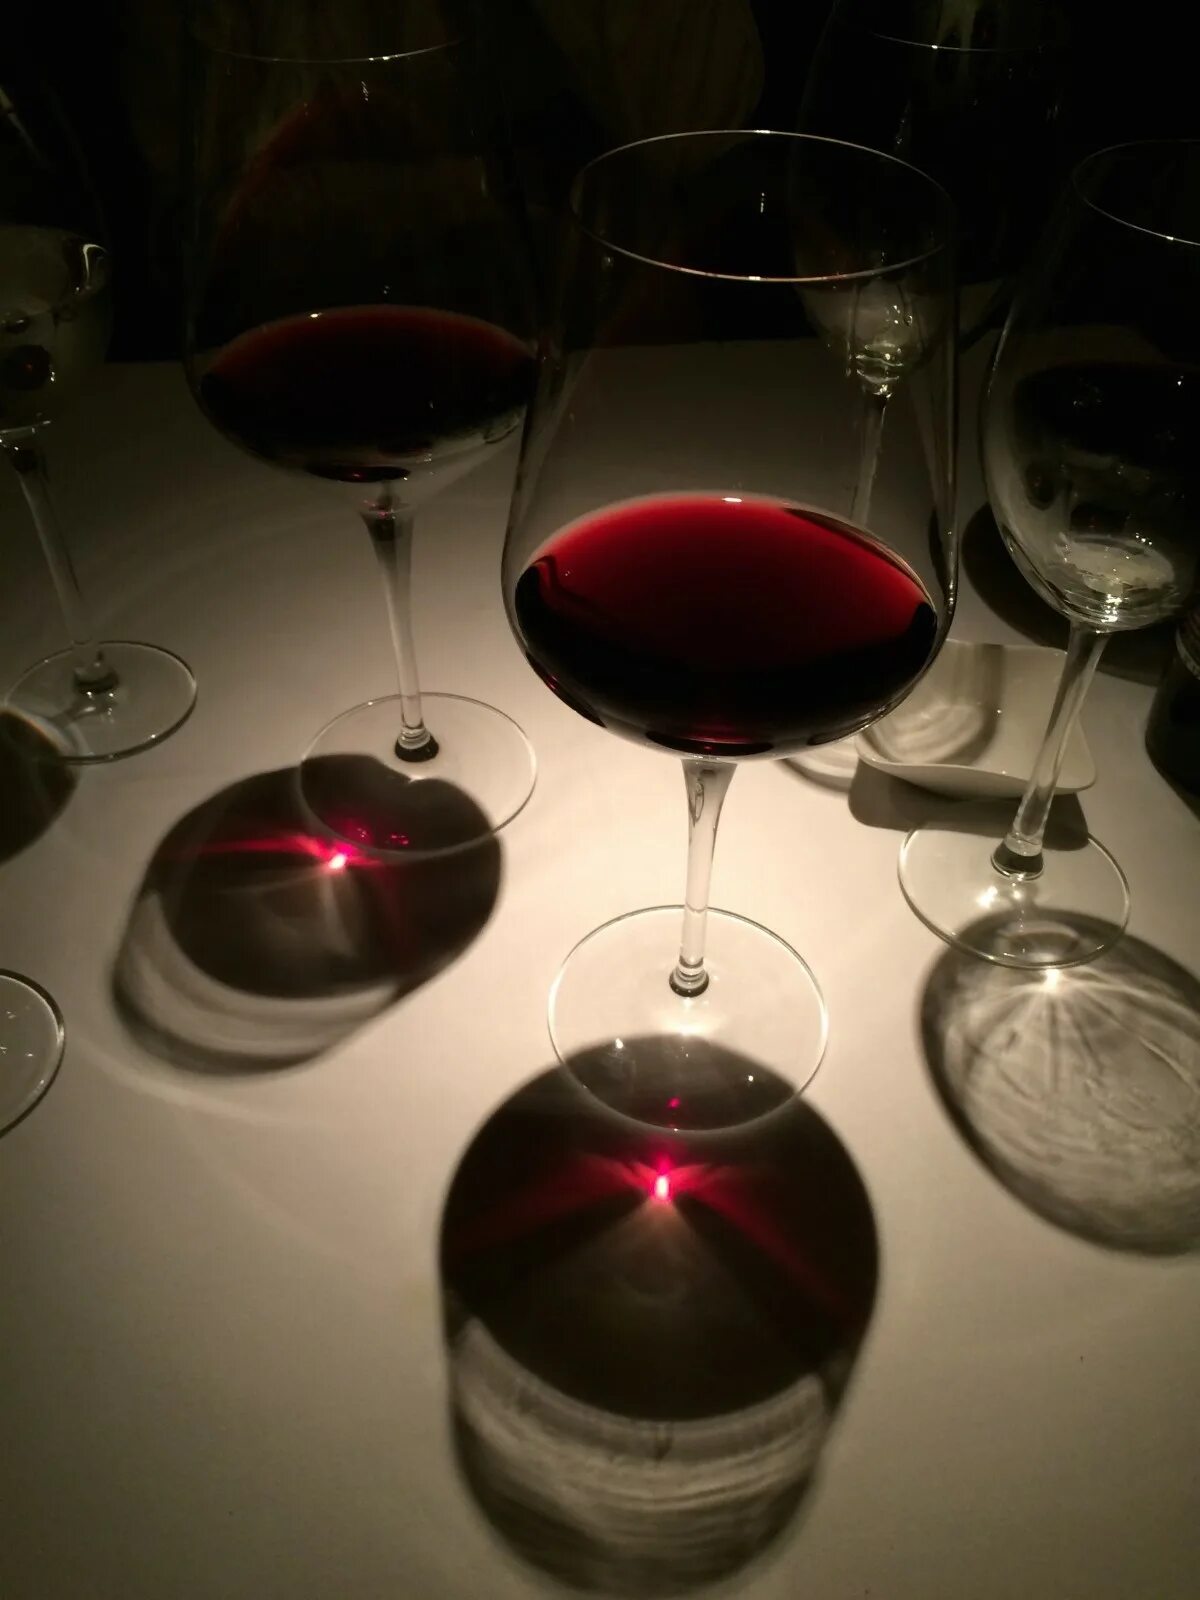 Бокал с вином. Бокалы на столе. Бокал вина на столе. Столик с вином. Вино бокал дома